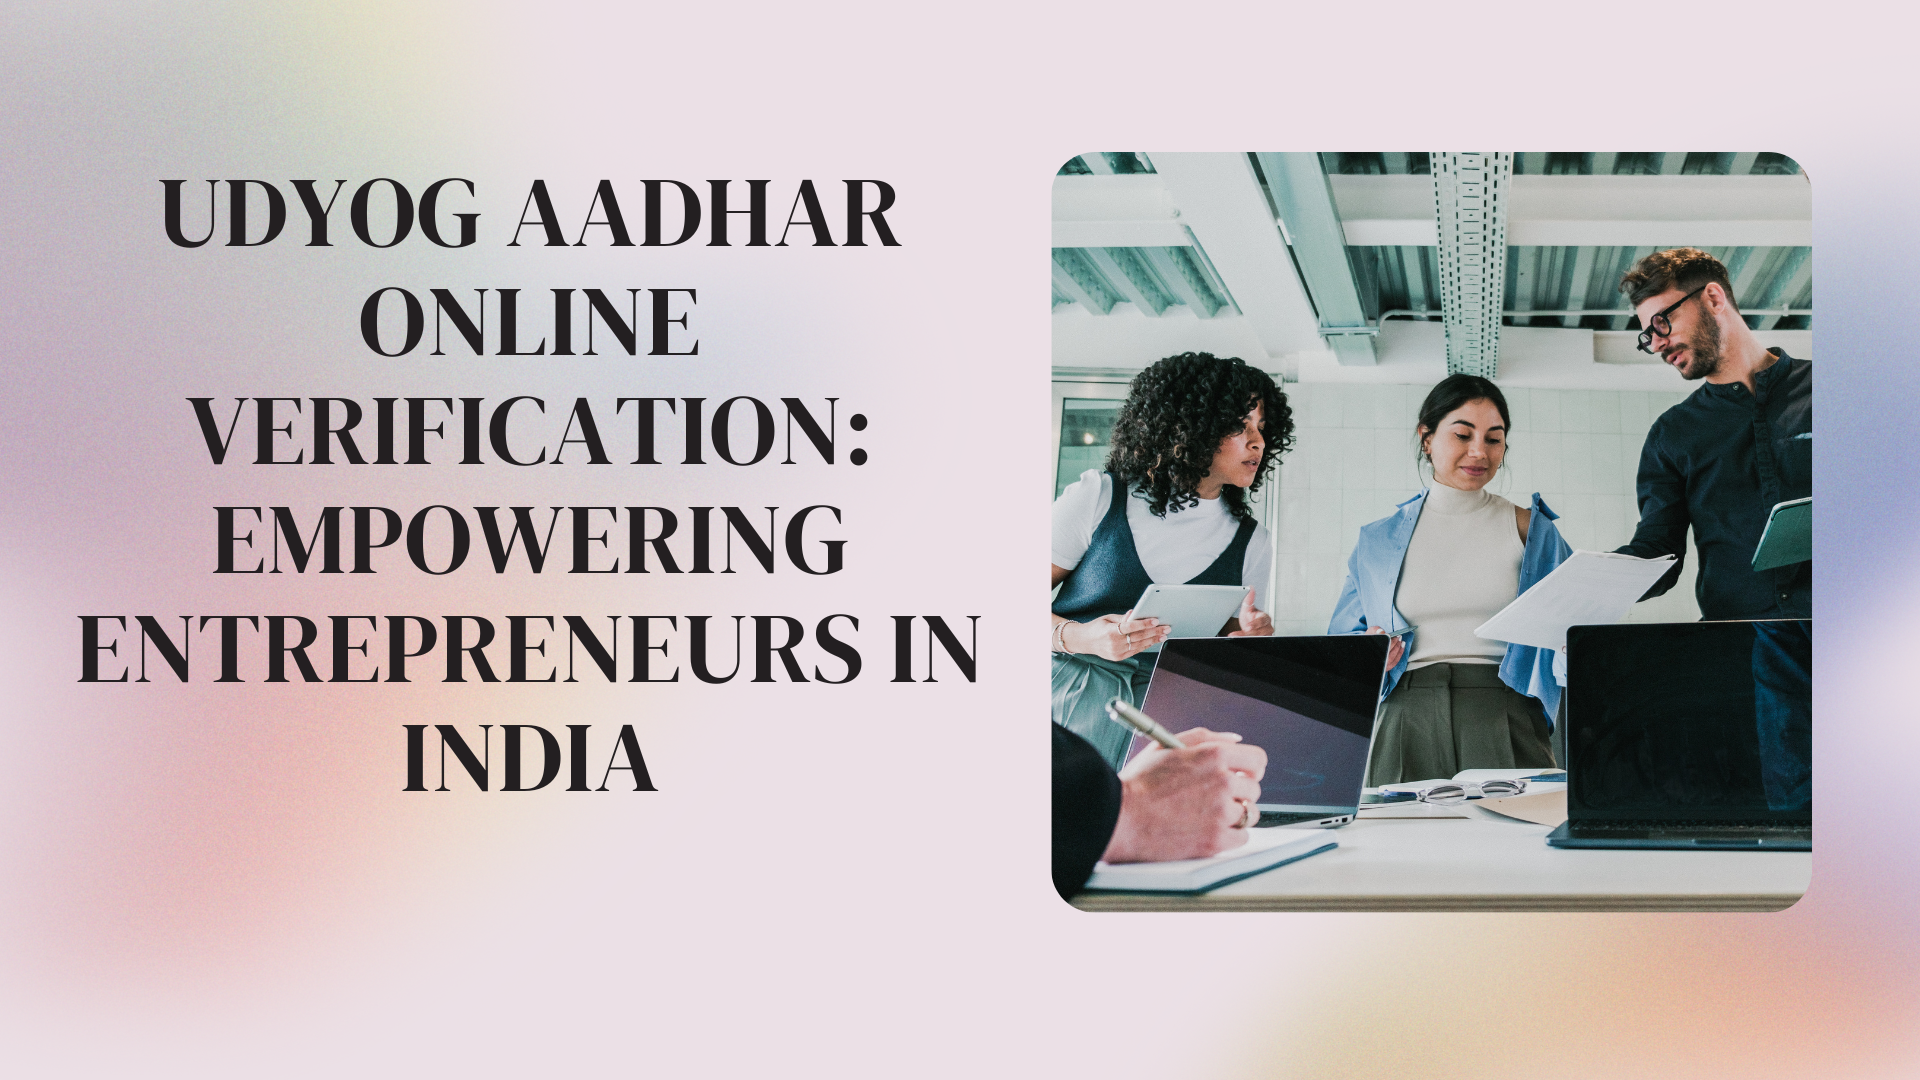 Udyog Aadhar Online Verification Empowering Entrepreneurs in India